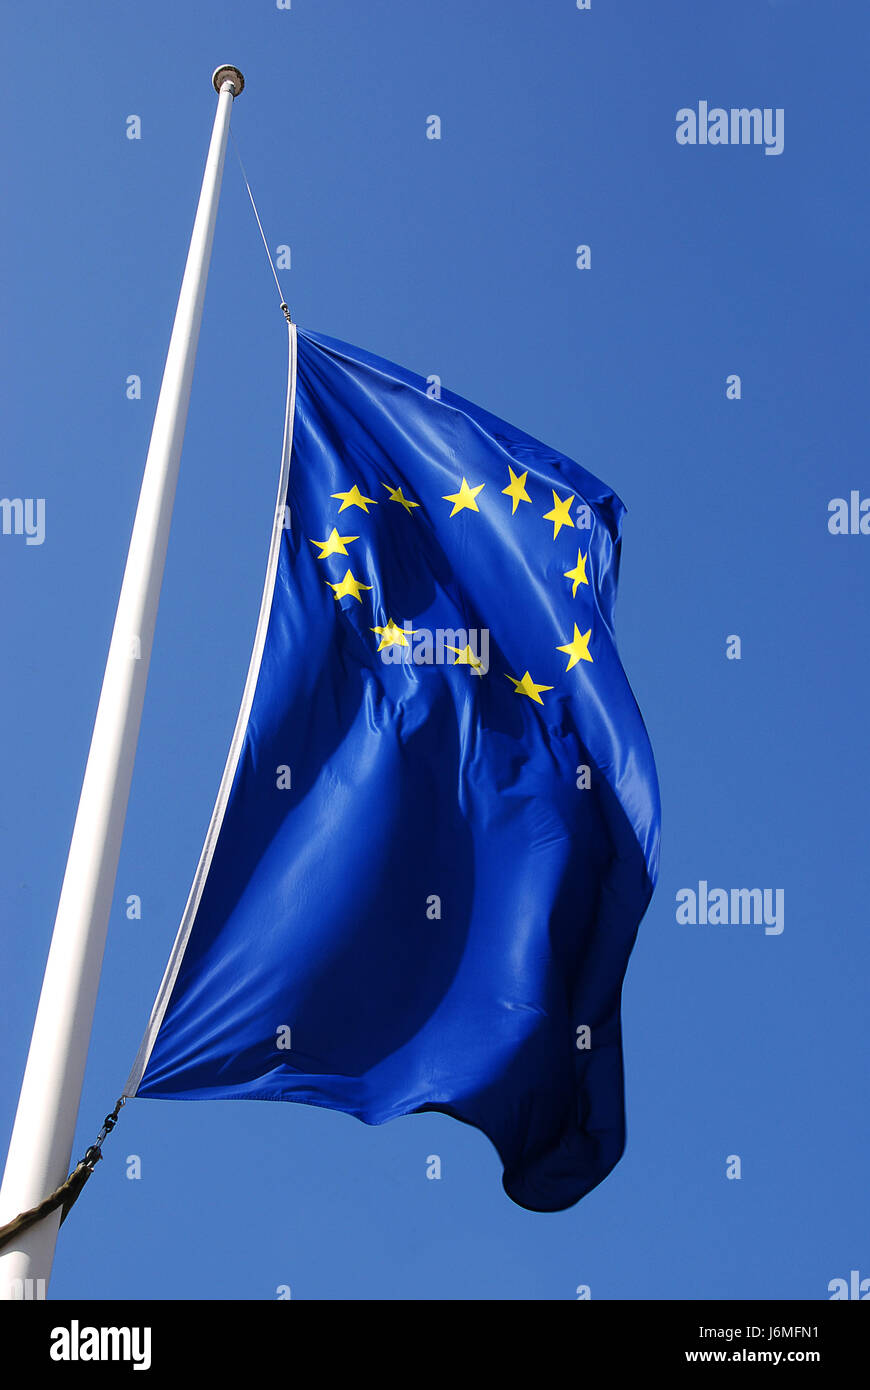 L'Europa blu bandiera flagstaff stelle asterischi blu europa simbolico montante di bandiera Foto Stock